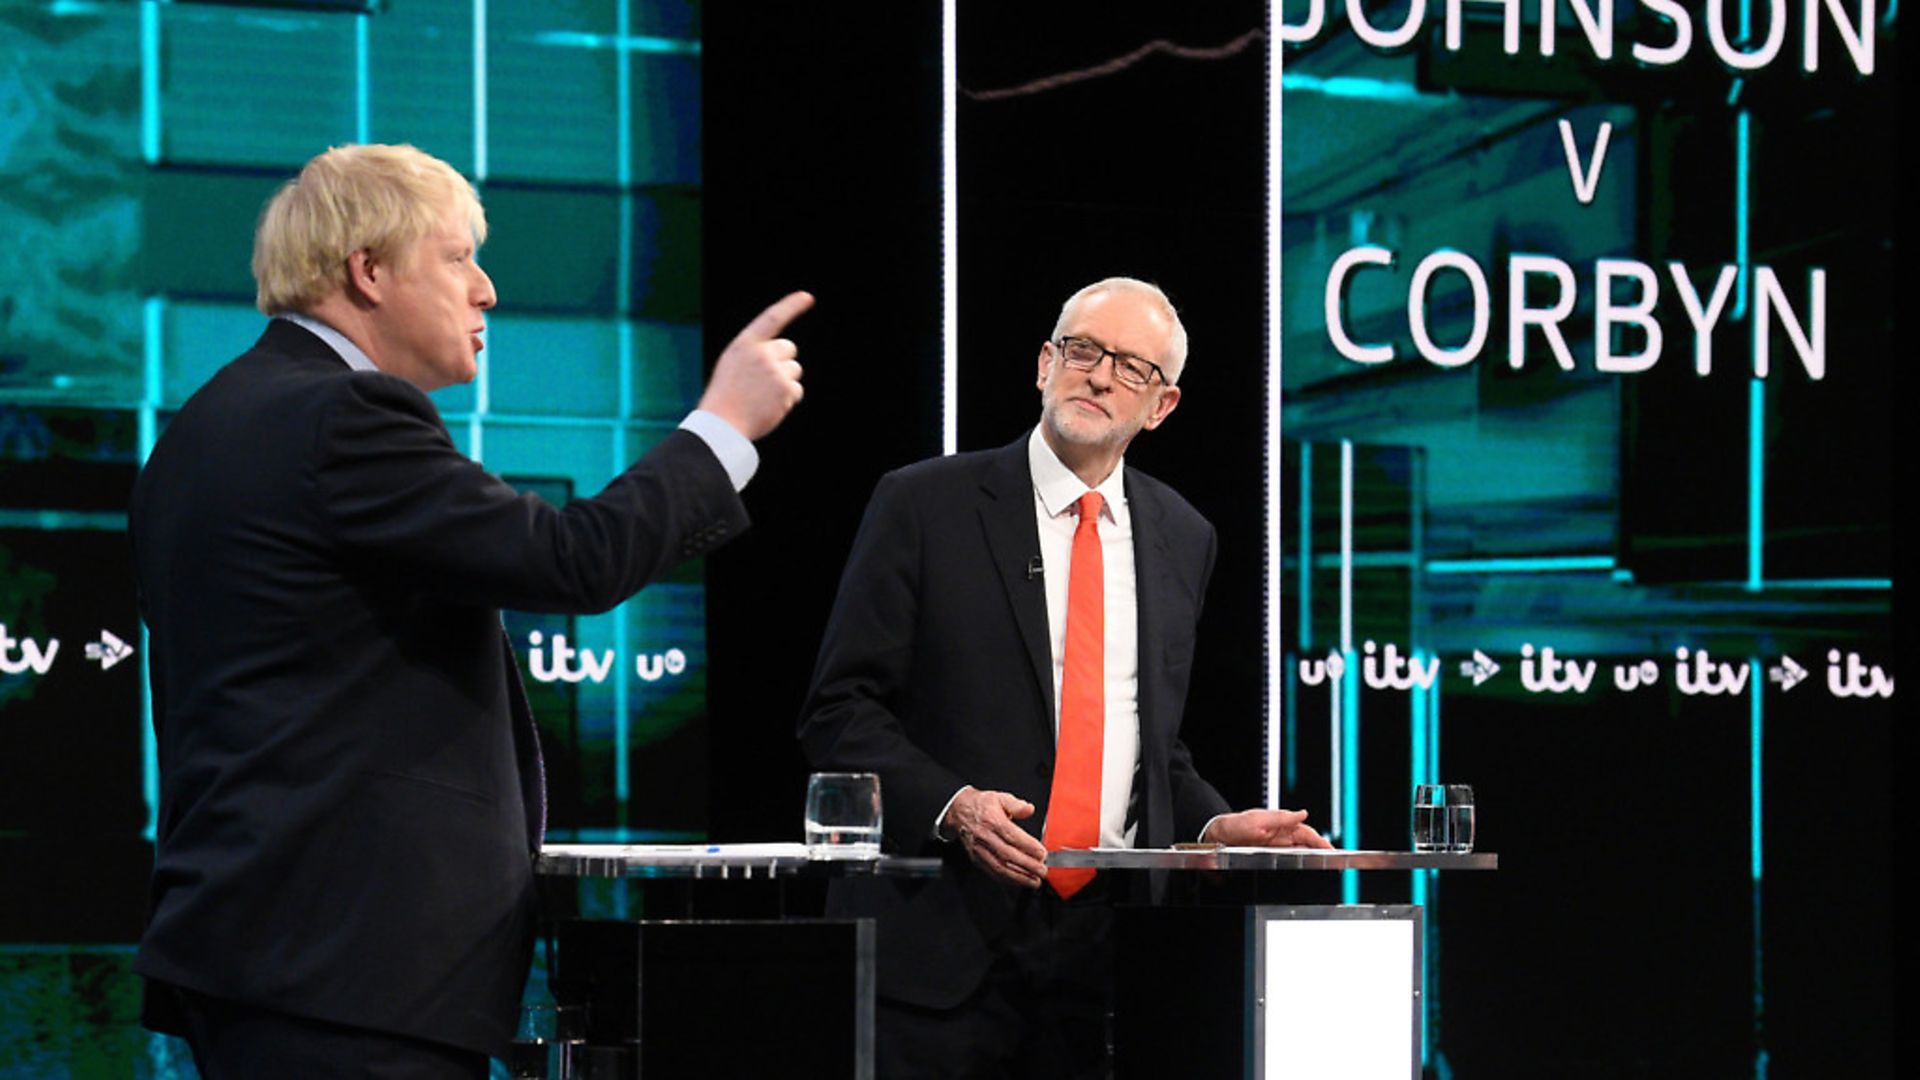 Boris Johnson and Jeremy Corbyn go head to head on ITV. Picture: Jonathan Hordle/ITV via Getty Images - Credit: ITV via Getty Images